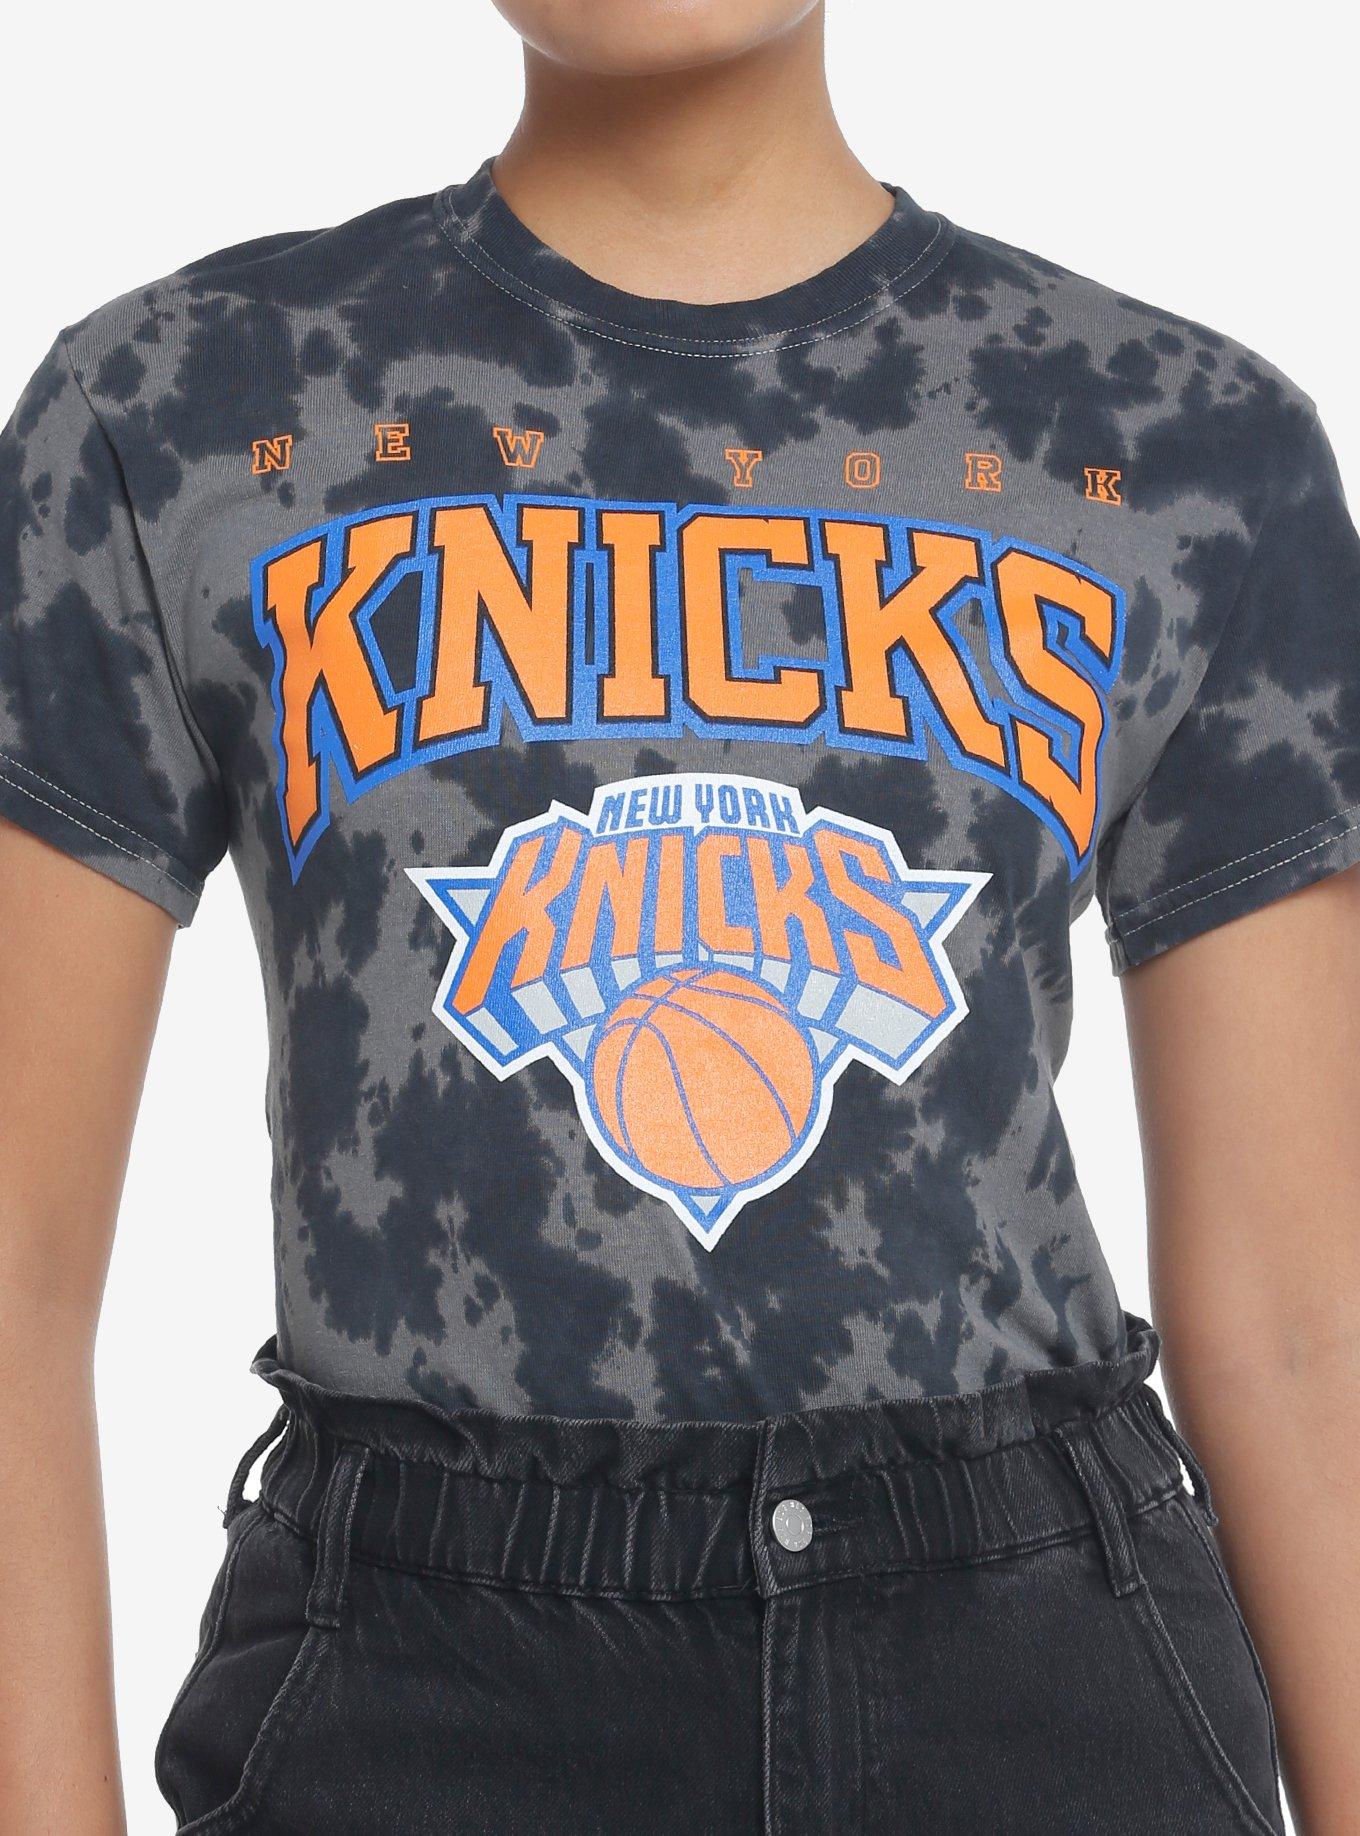 Knicks nba tshirt - Gem